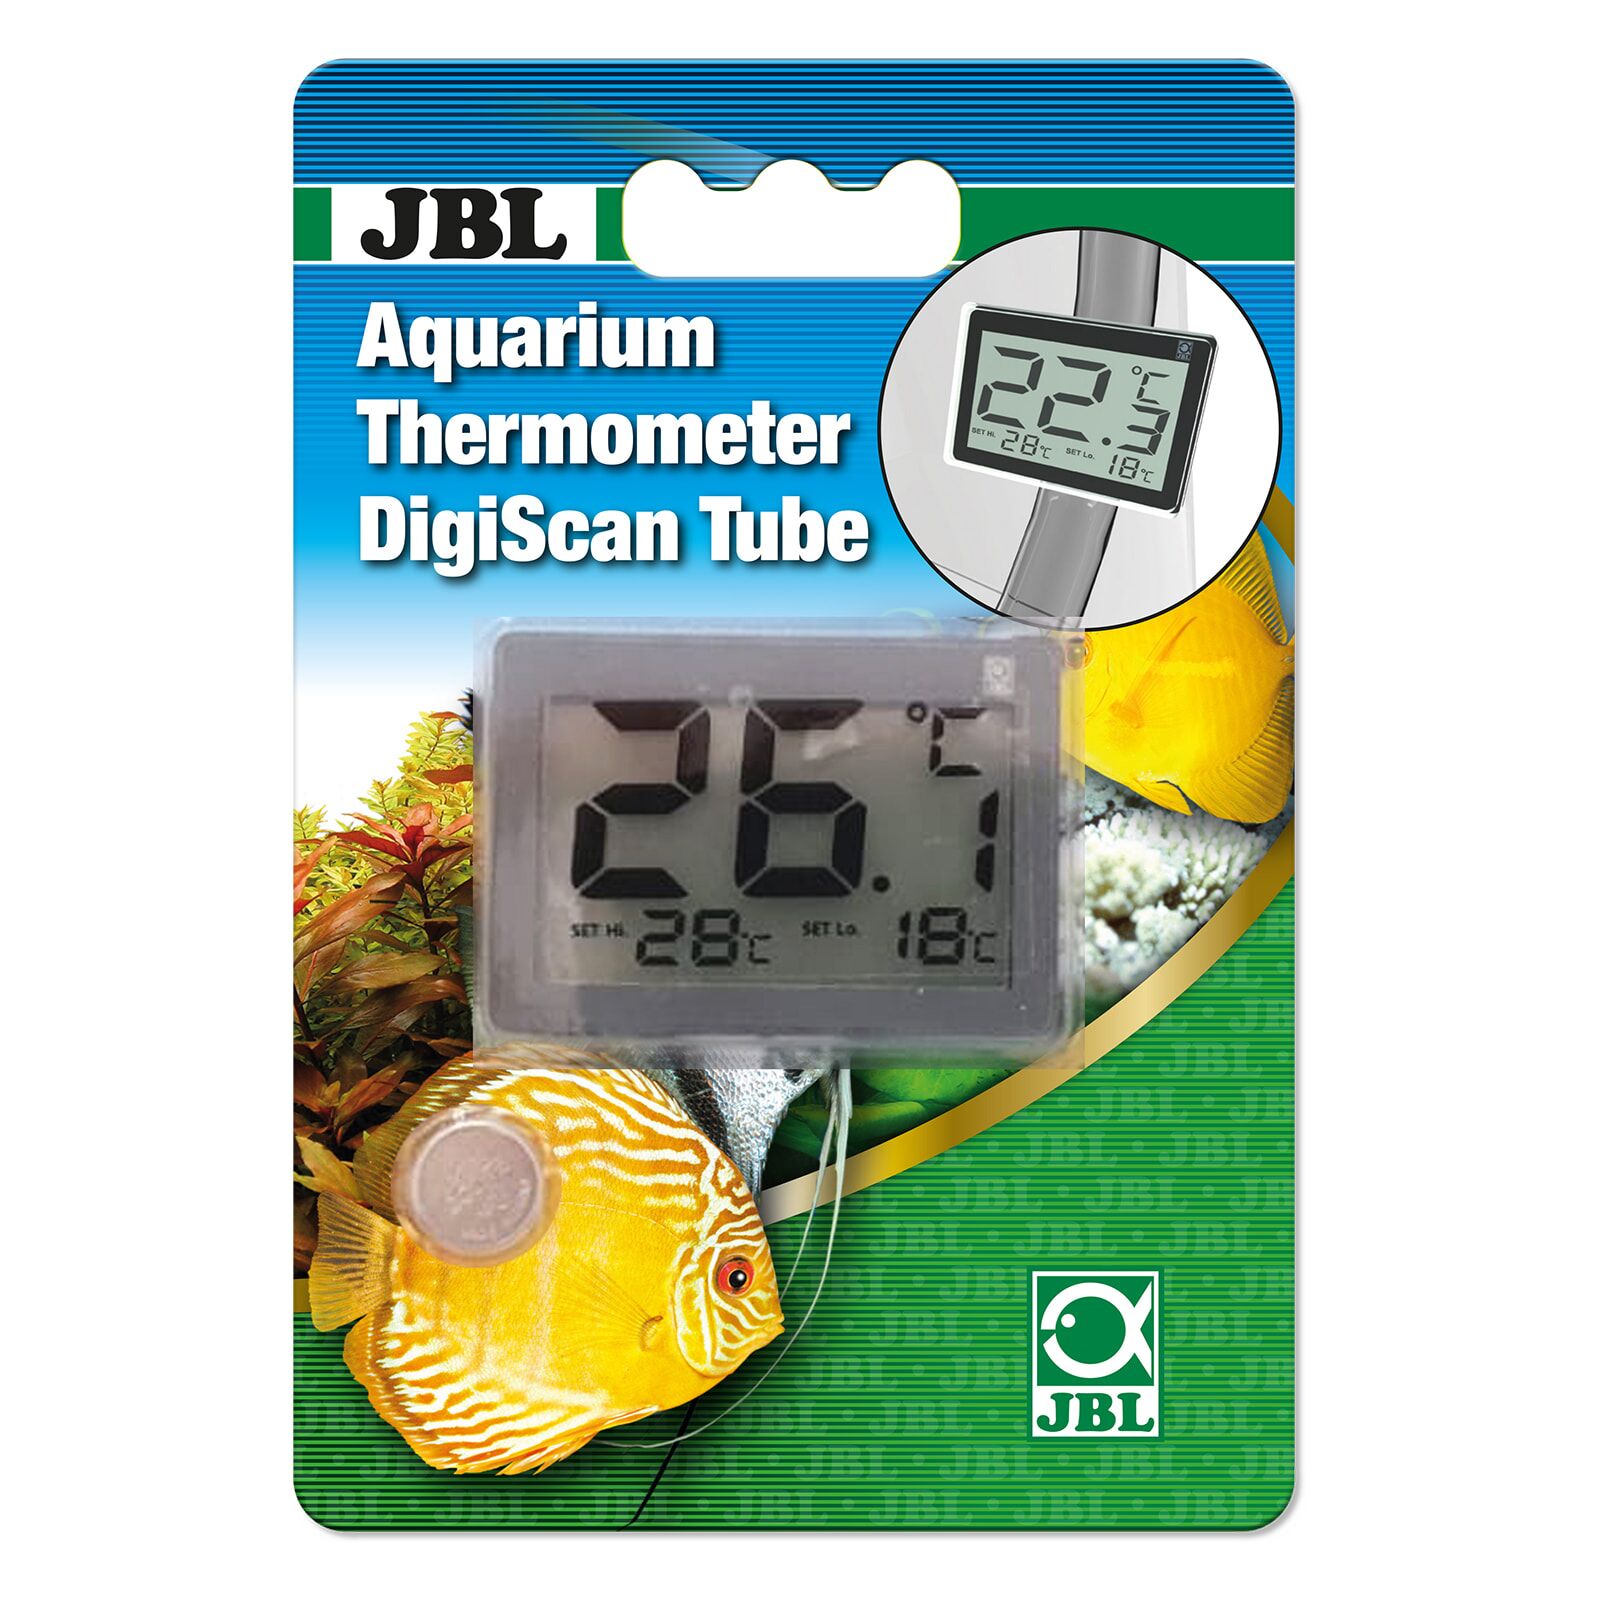 JBL - Aquarium Thermometer DigiScan Tube